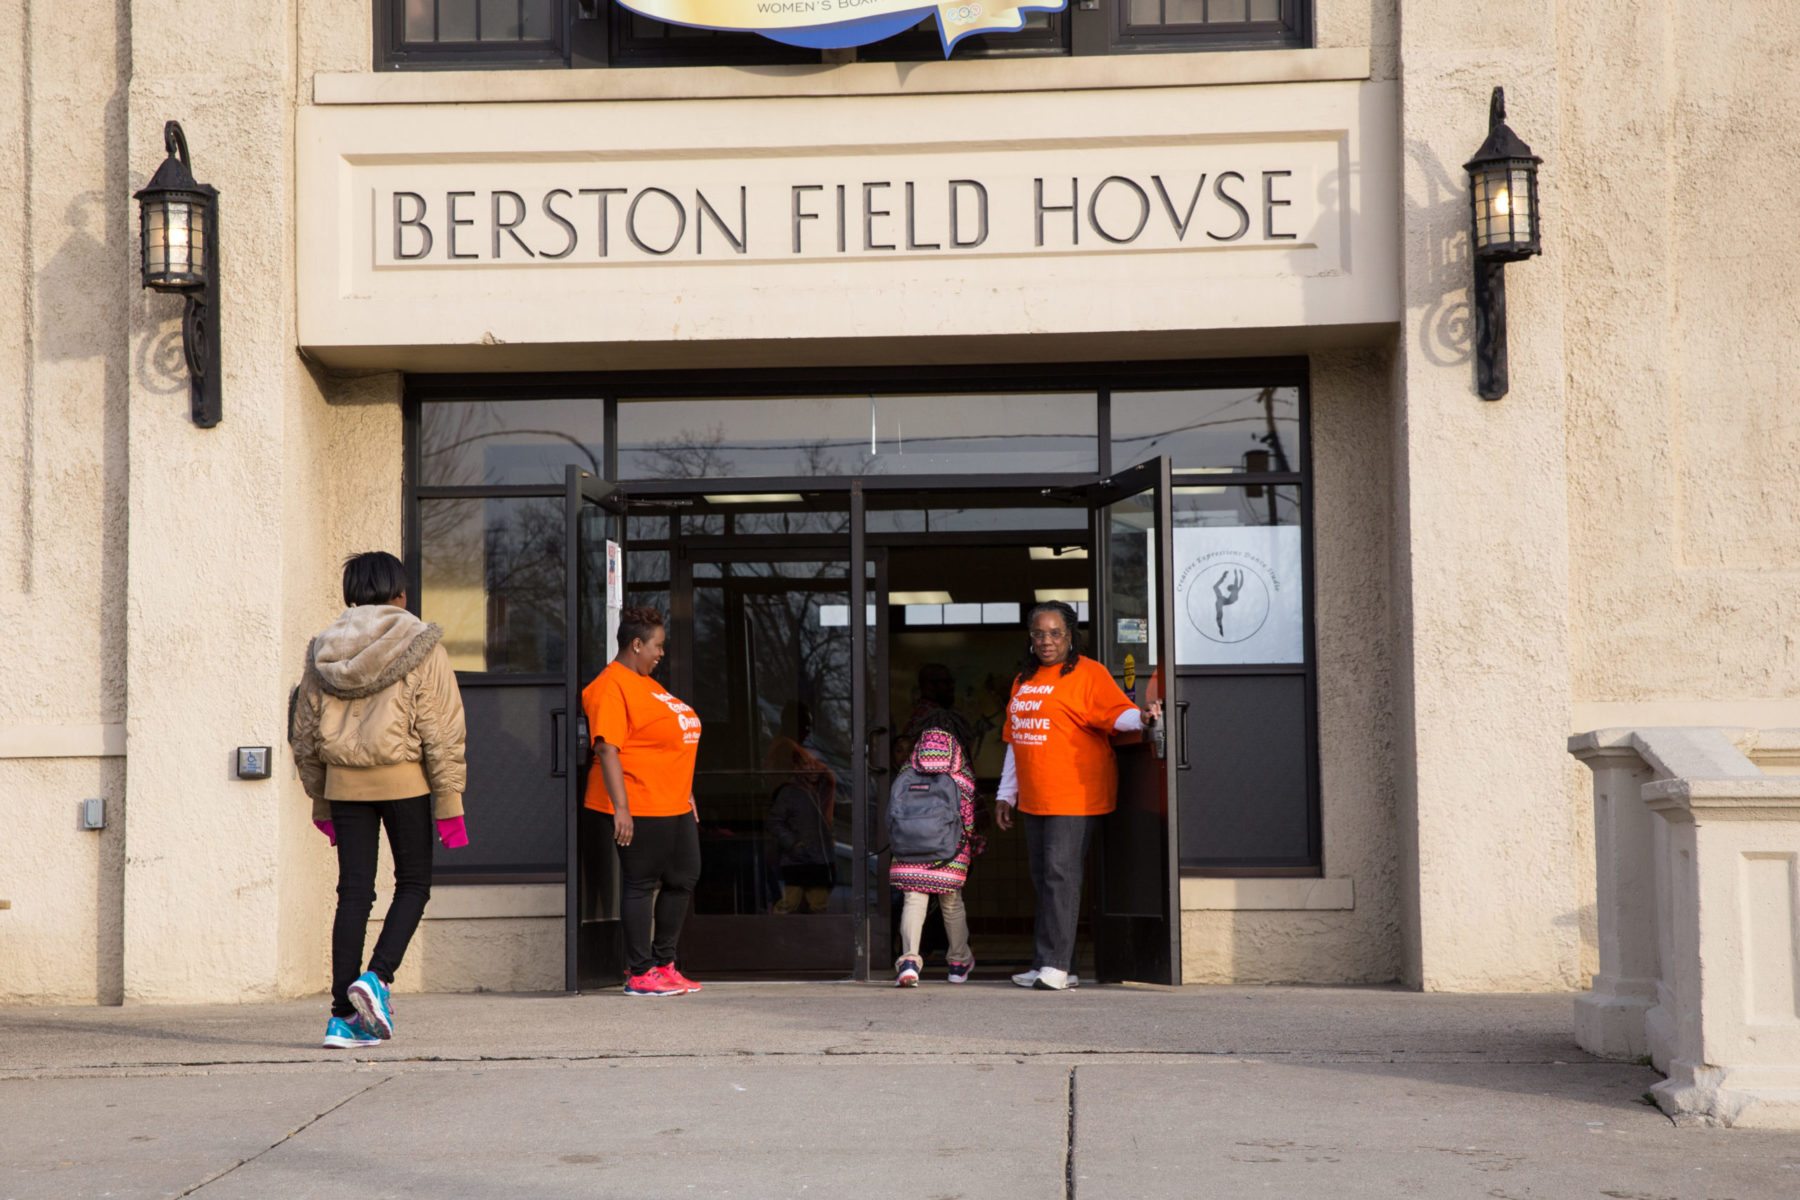 Berston Field House, a north Flint neighborhood hub